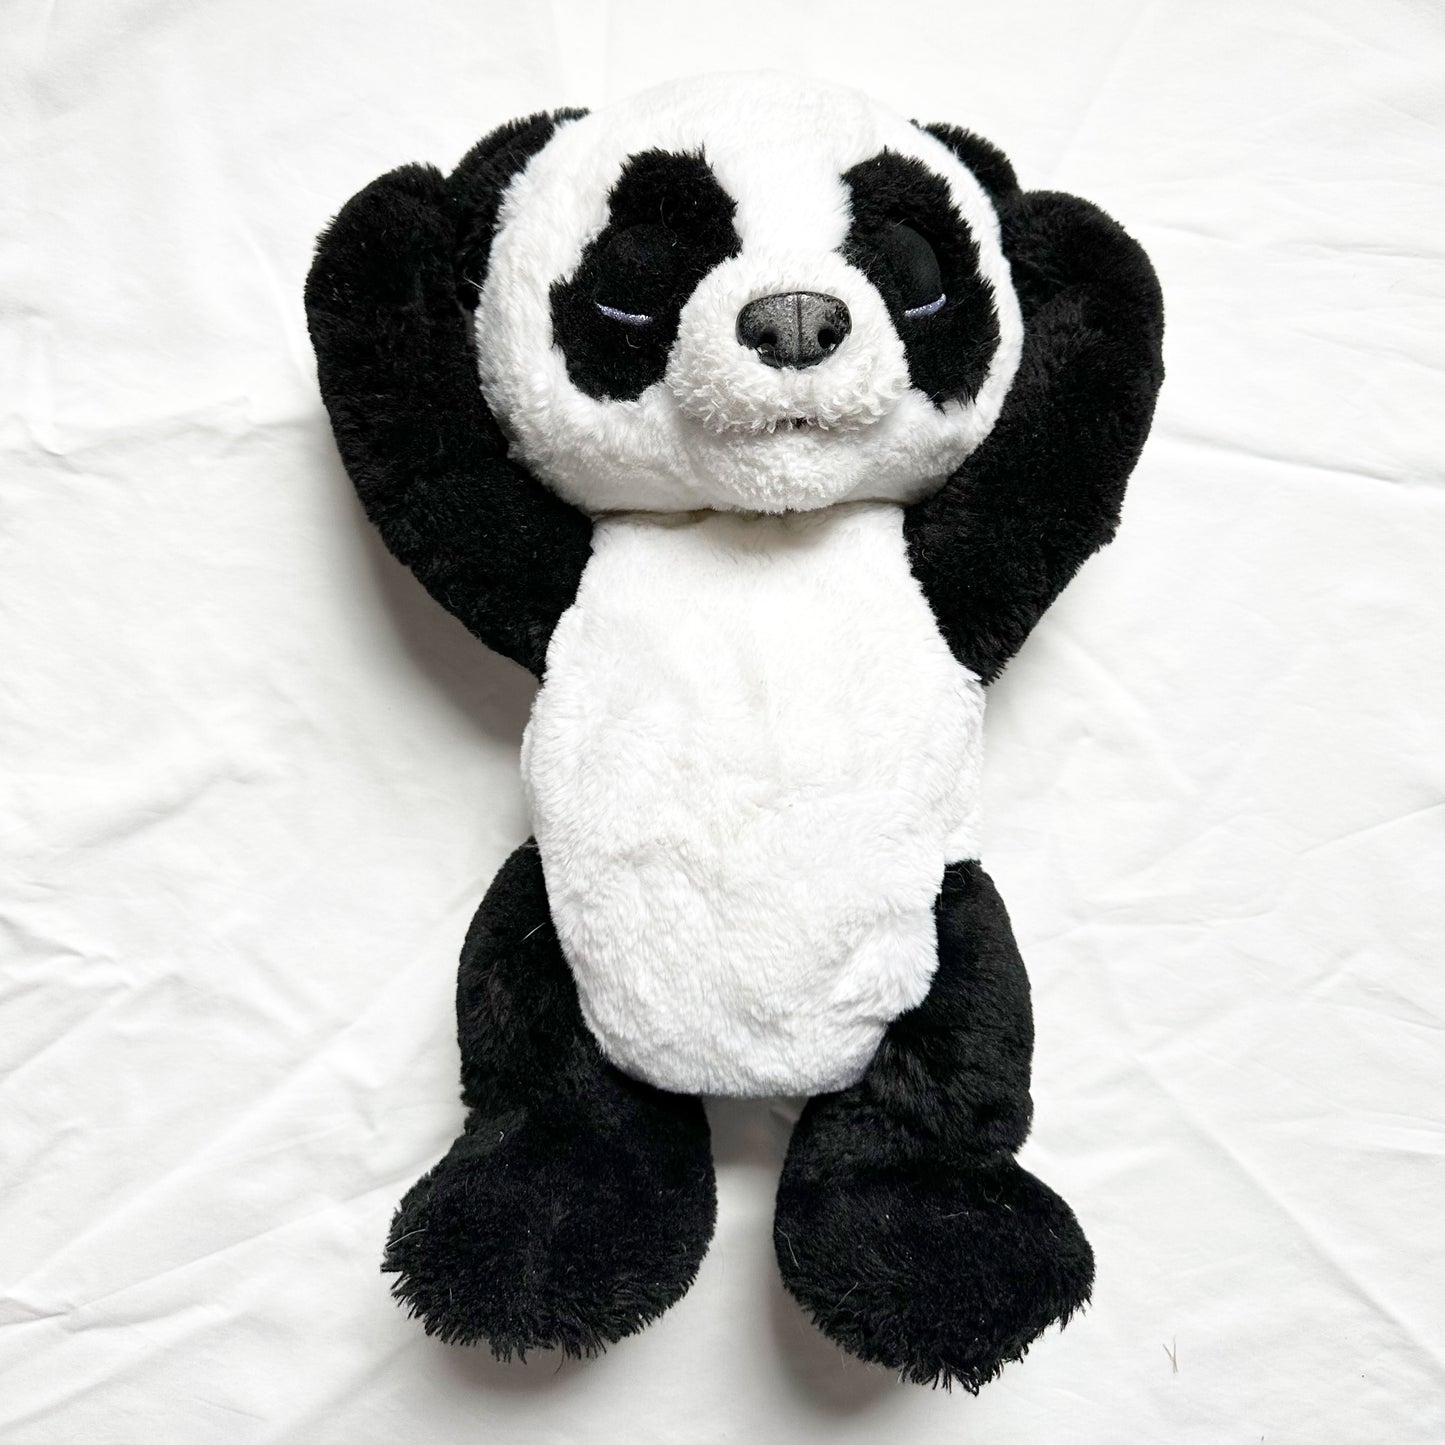 FurReal friends panda interactive toy